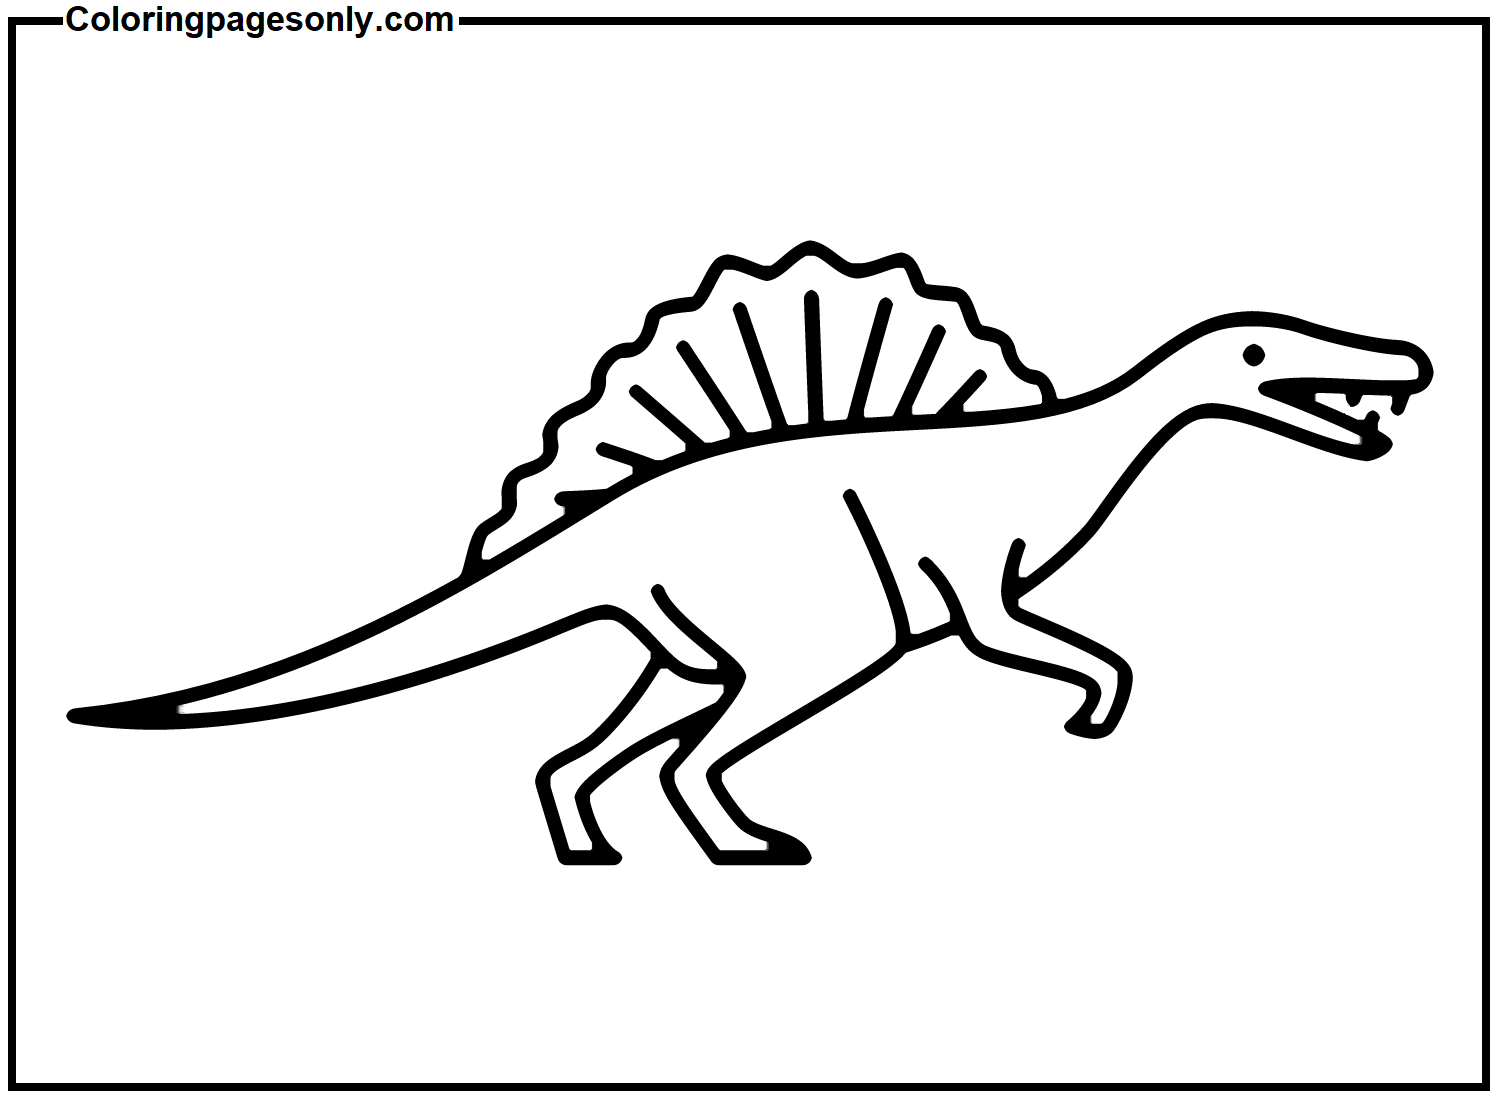 Спинозавр. Распечатка спинозавра.